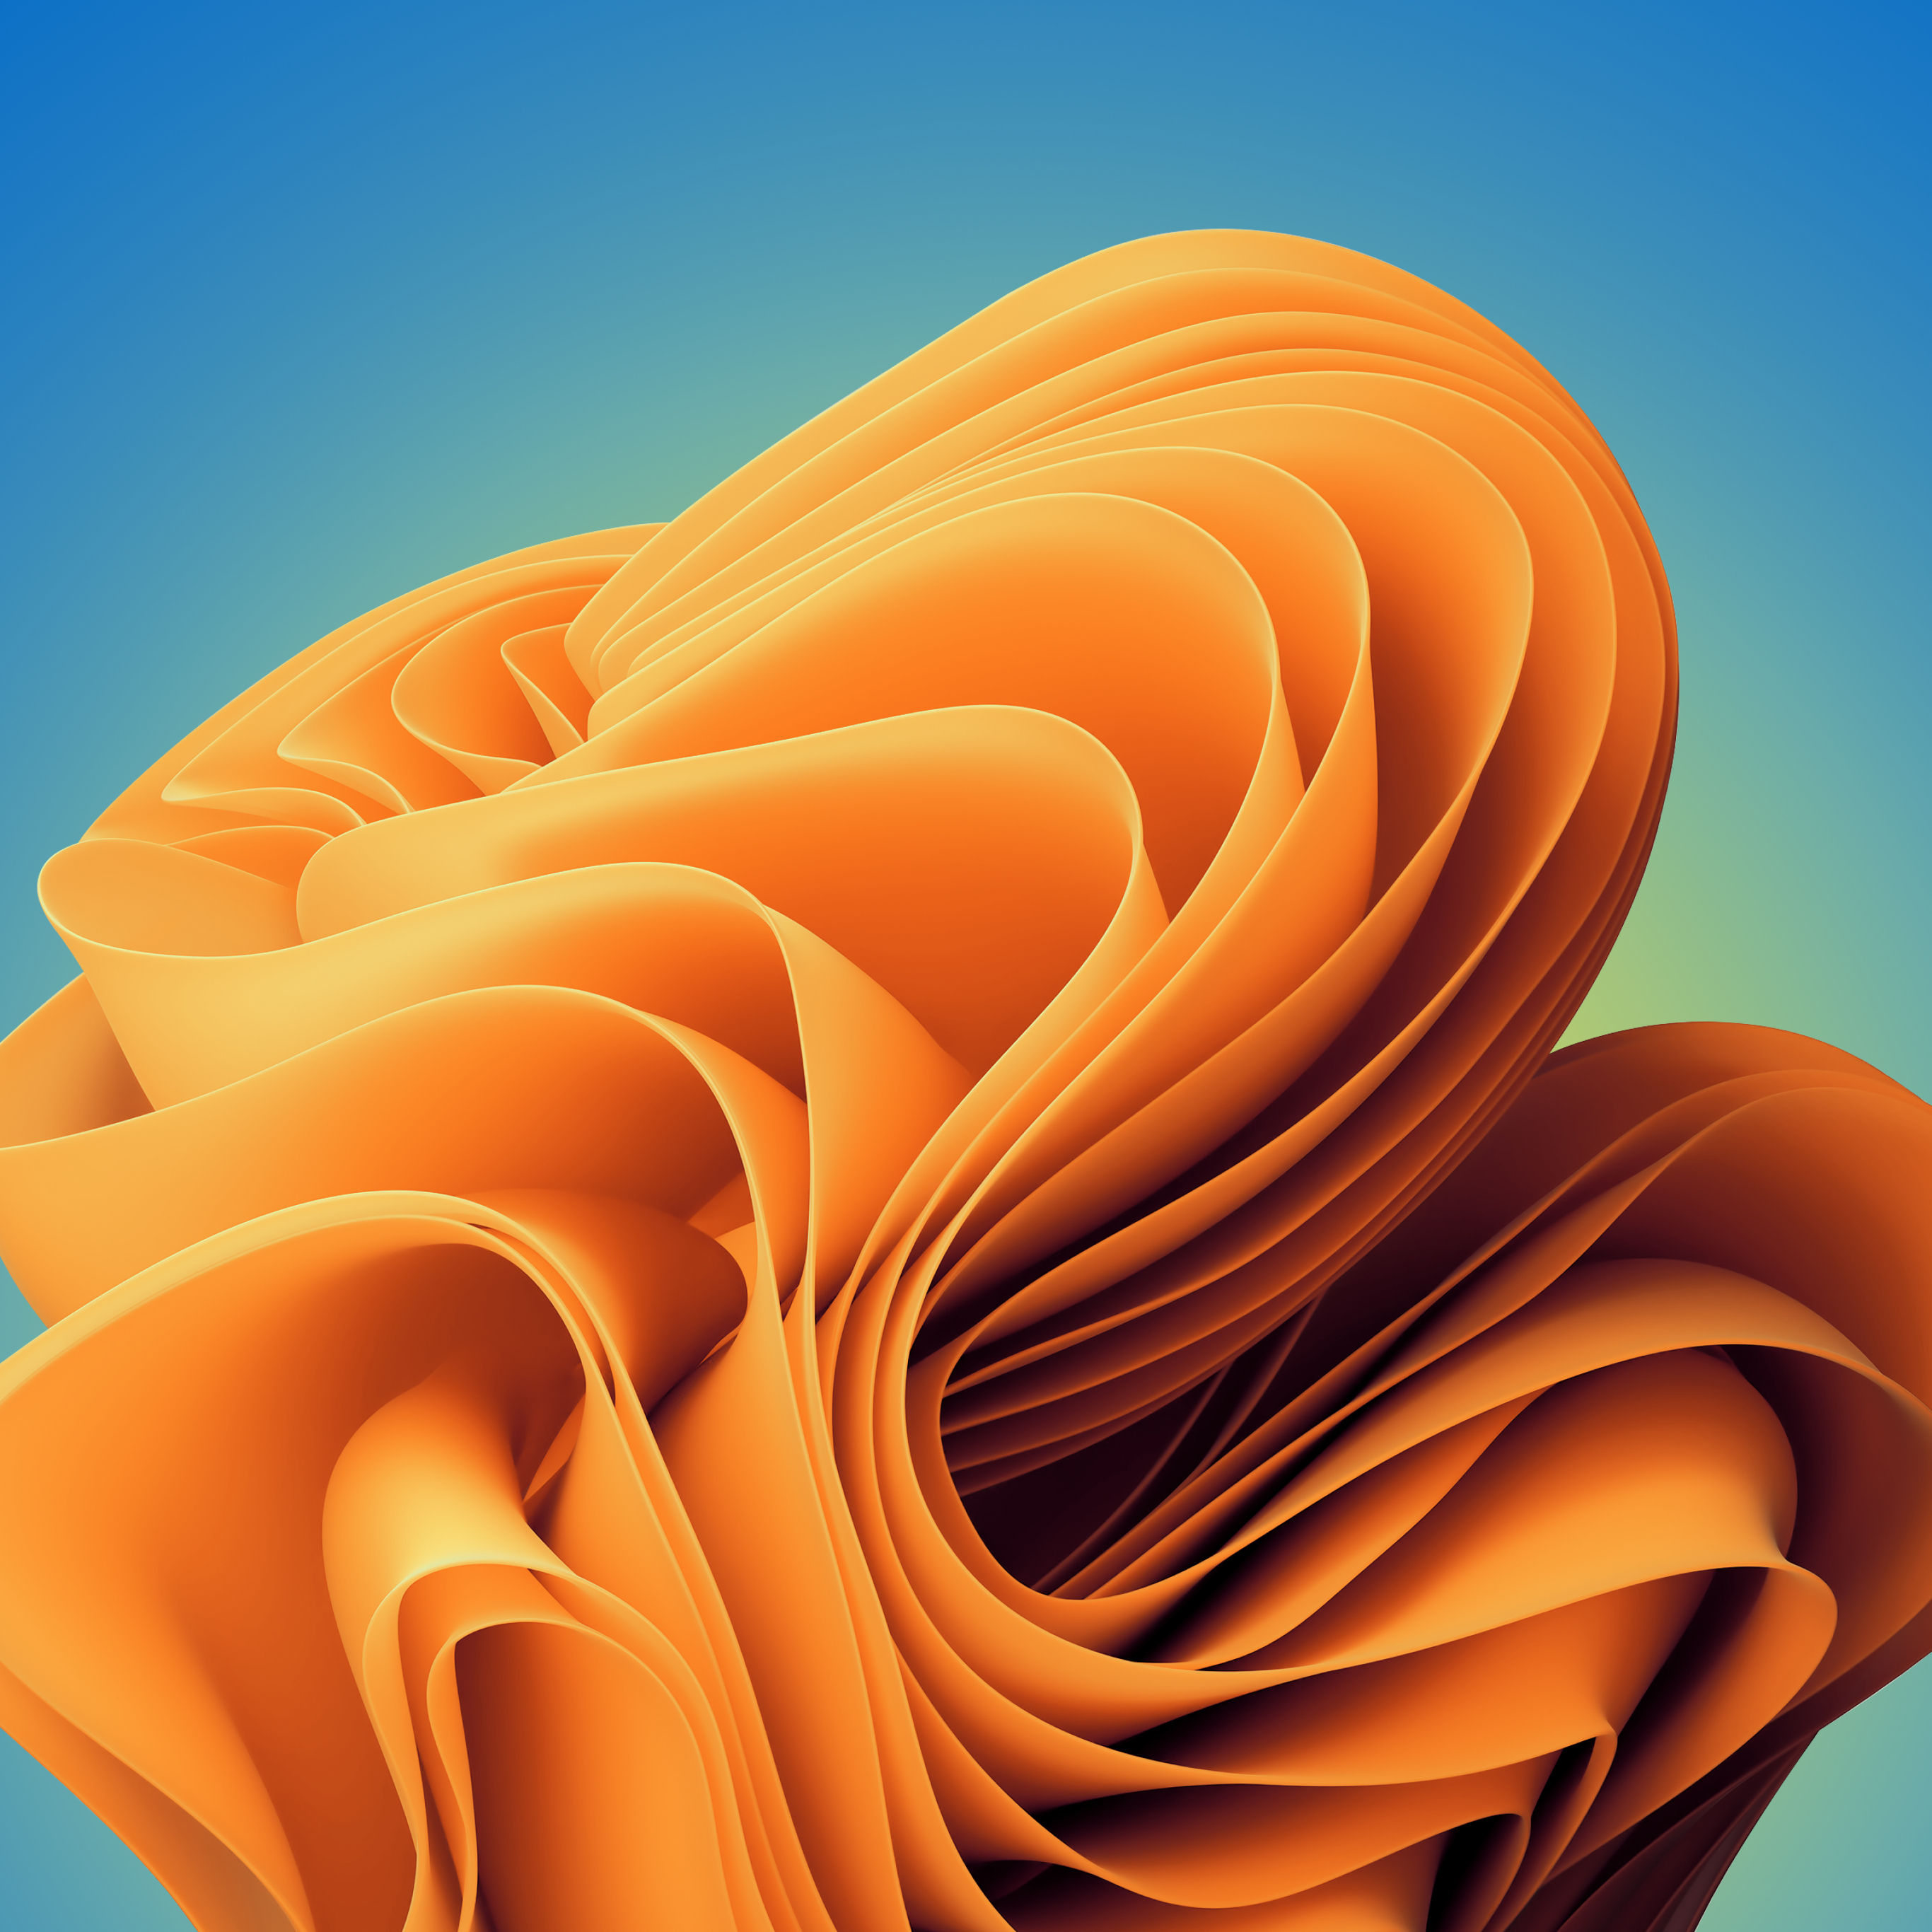 Top 999+ Neon Orange Wallpaper Full HD, 4K✓Free to Use